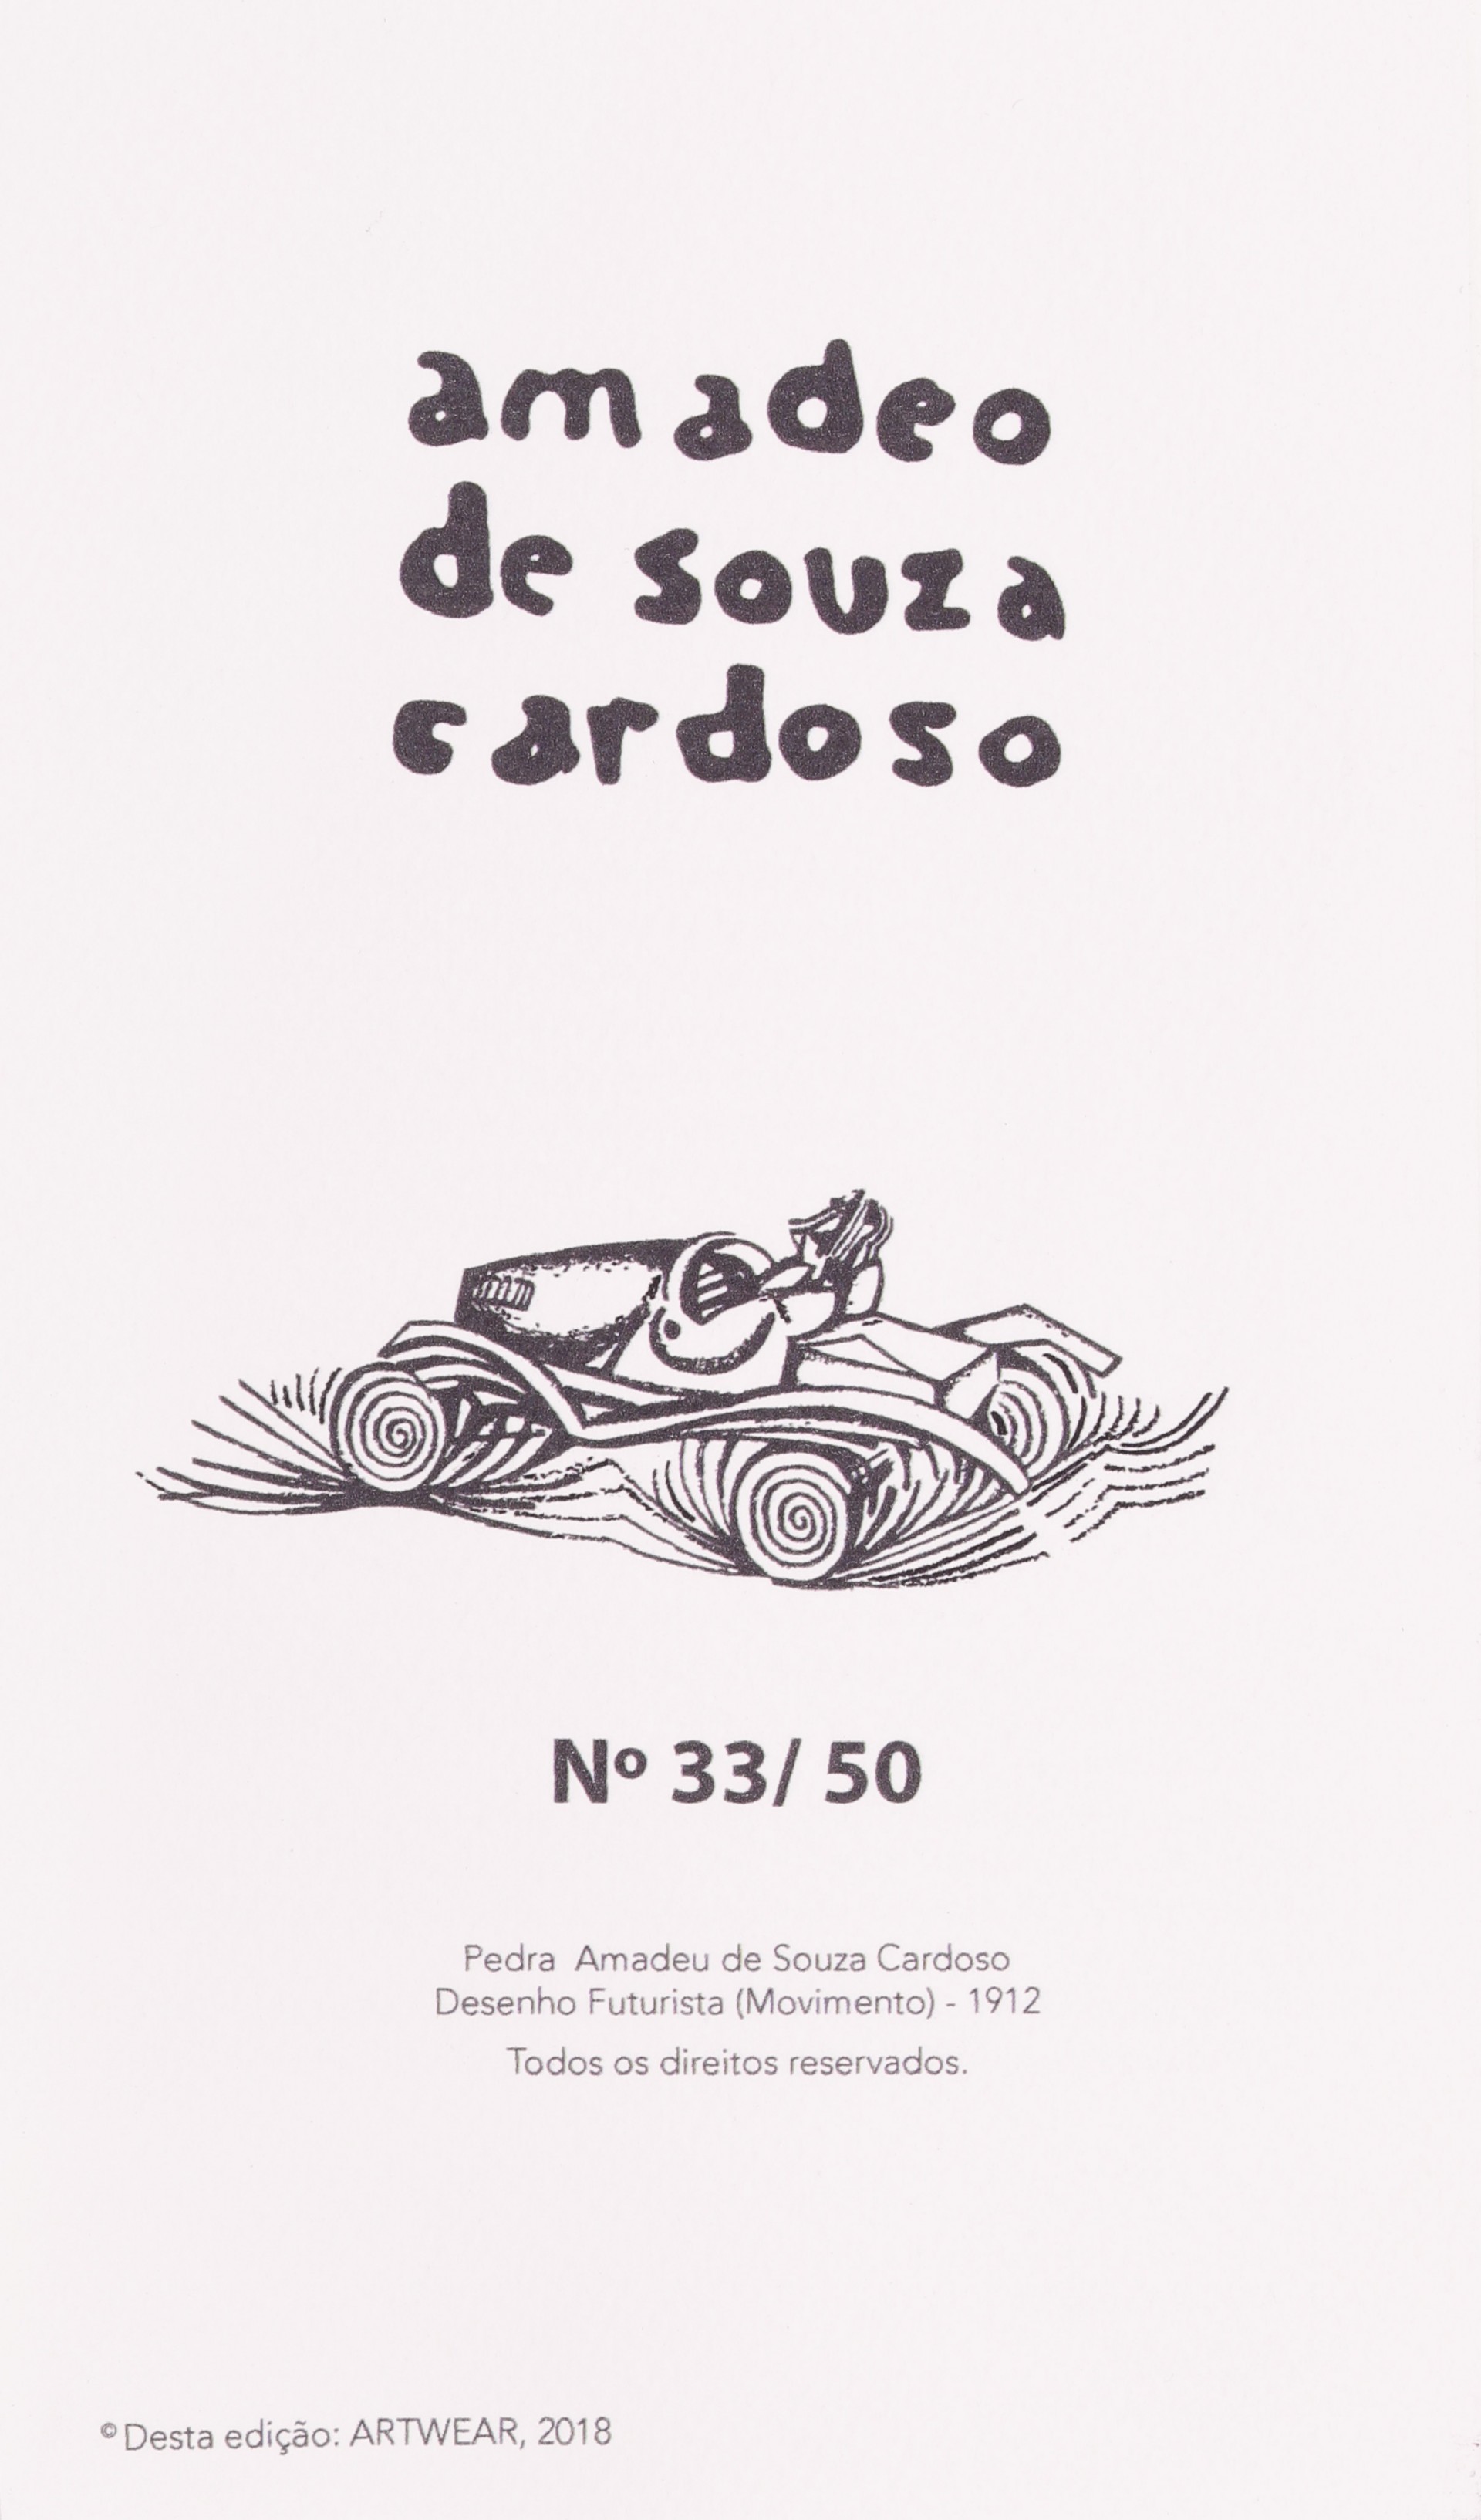 AMADEO DE SOUZA CARDOSO (1887-1918)